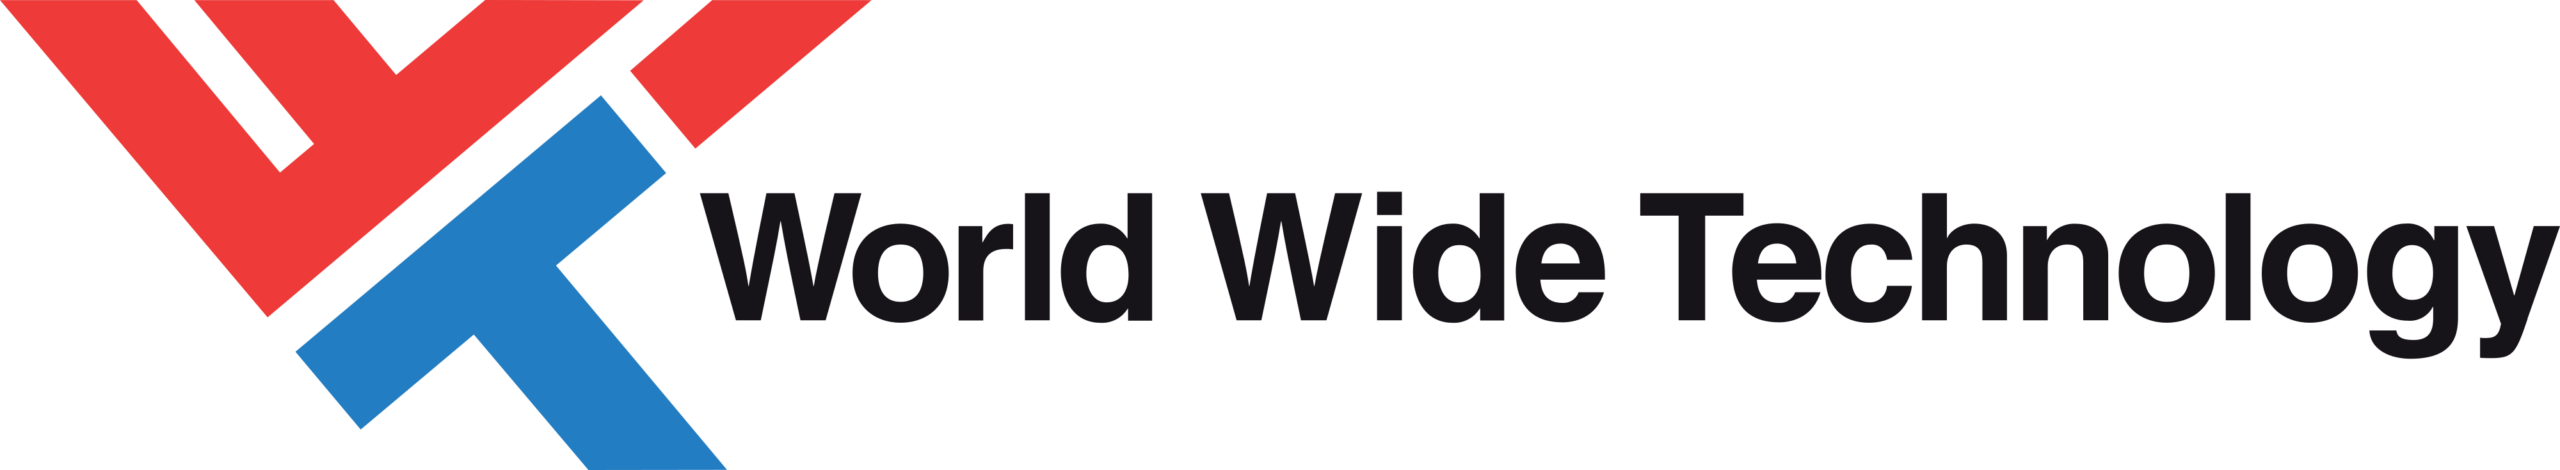 worldwide technology business logo